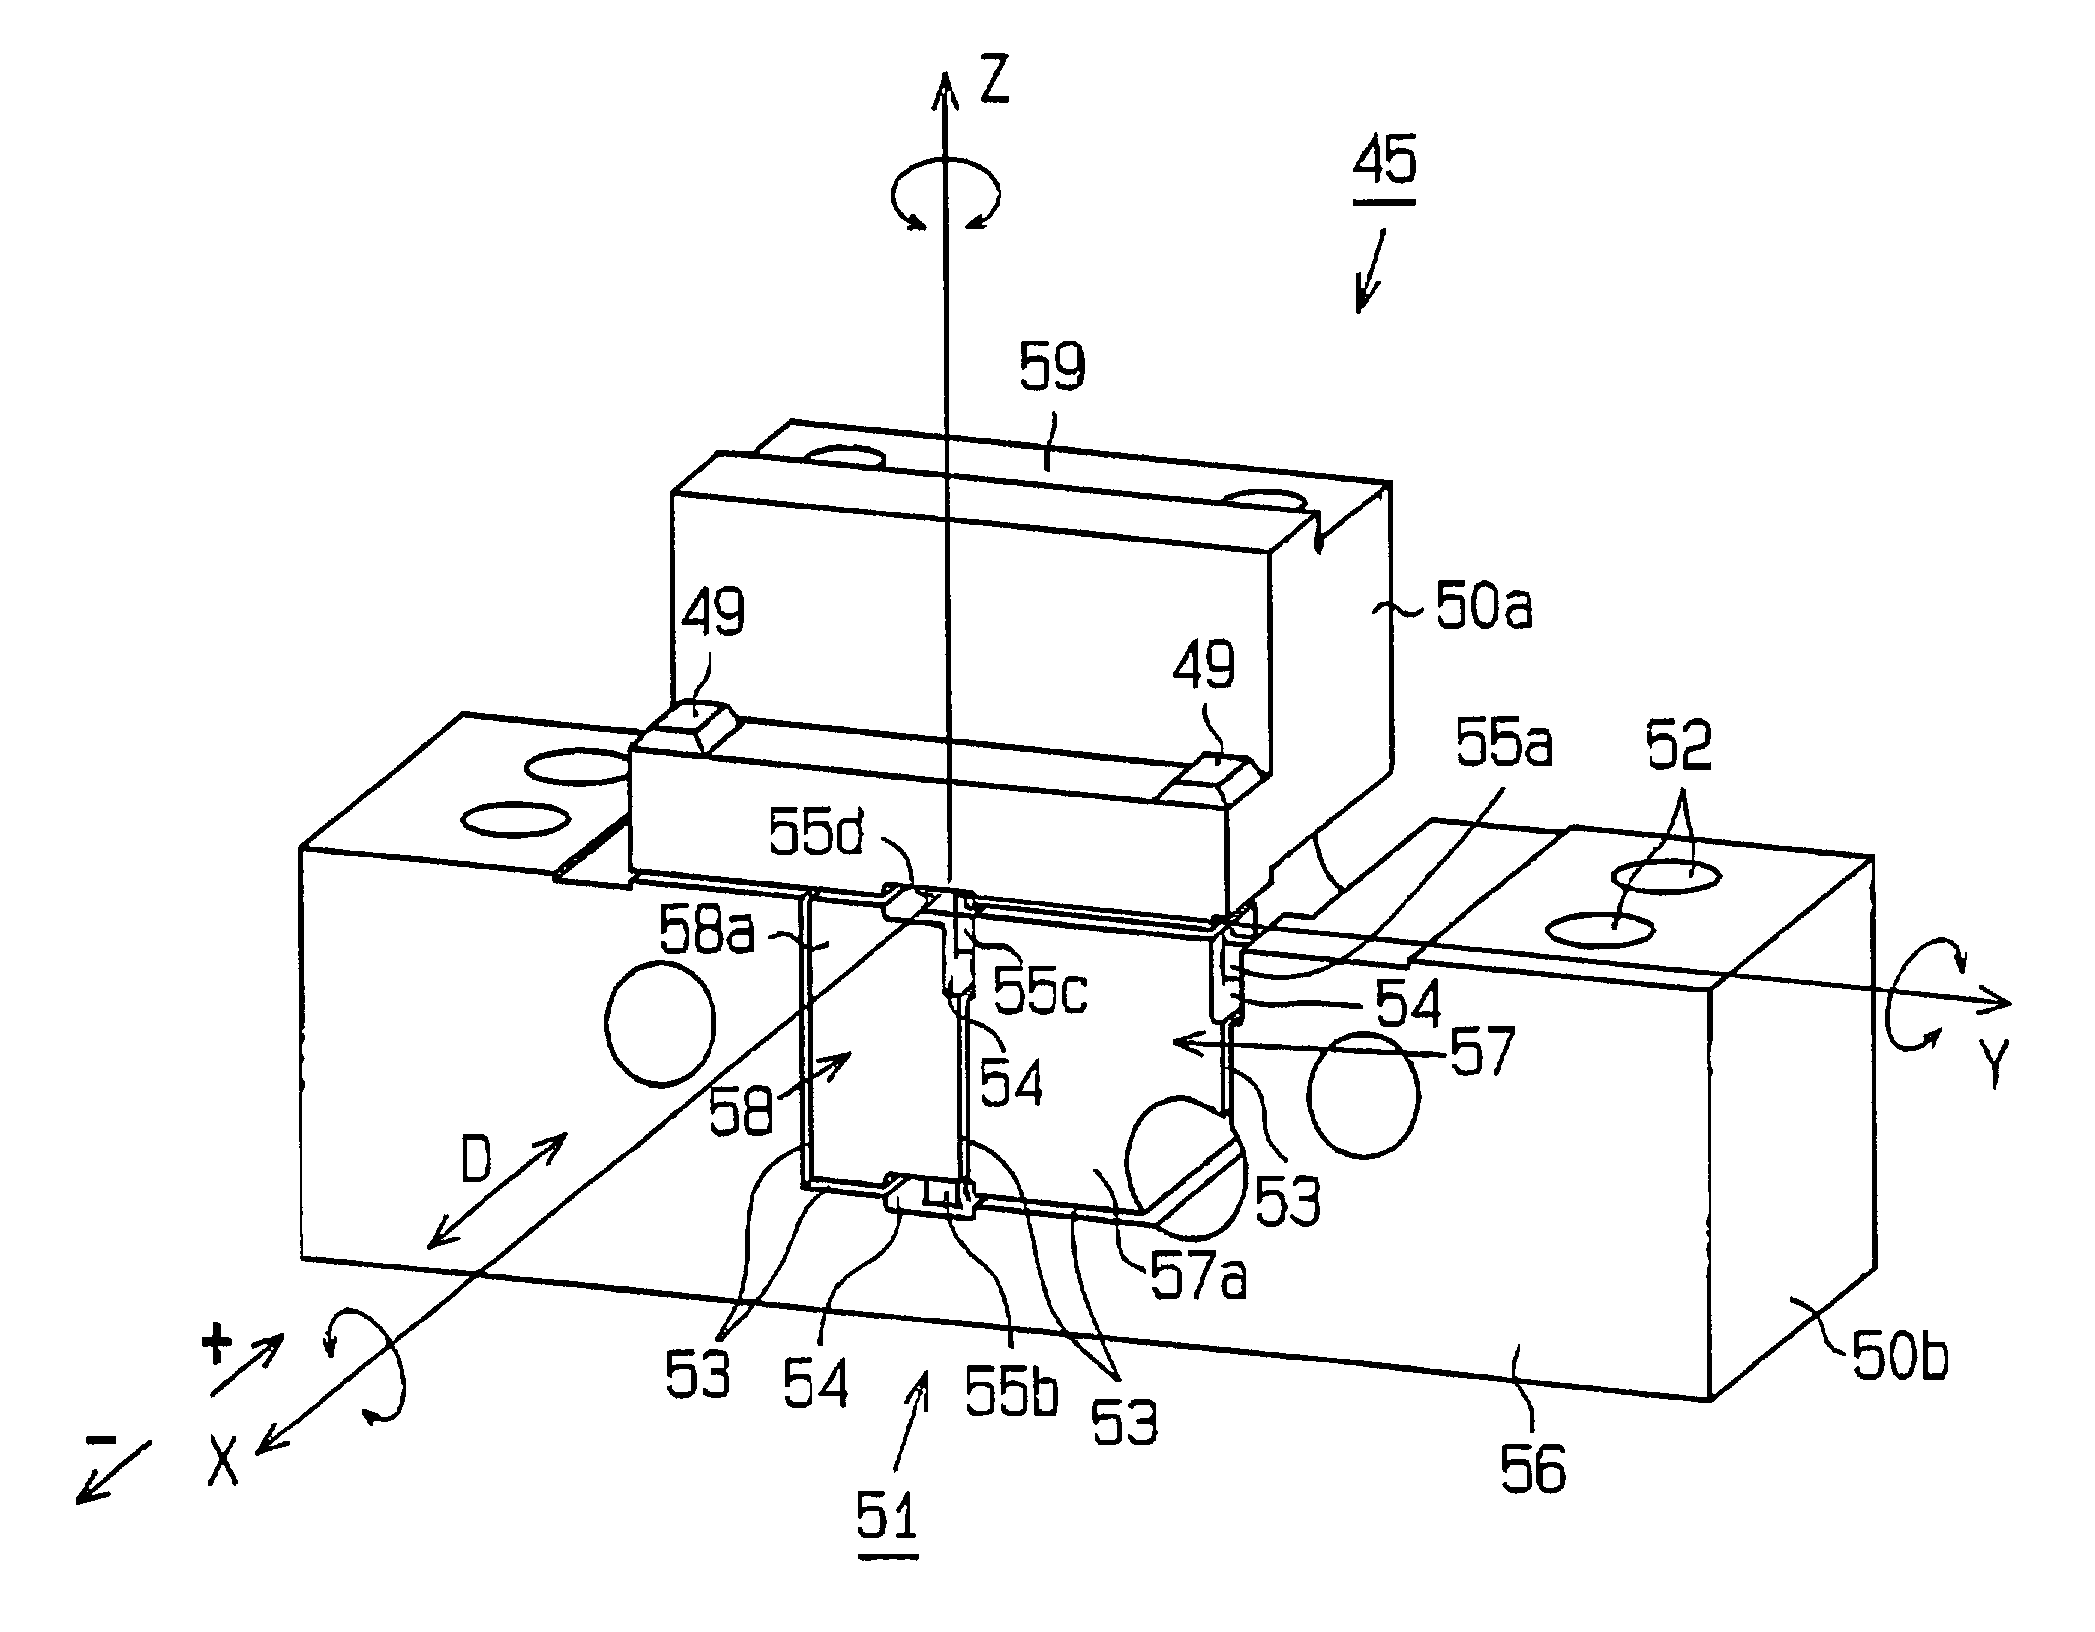 Optical element holding apparatus